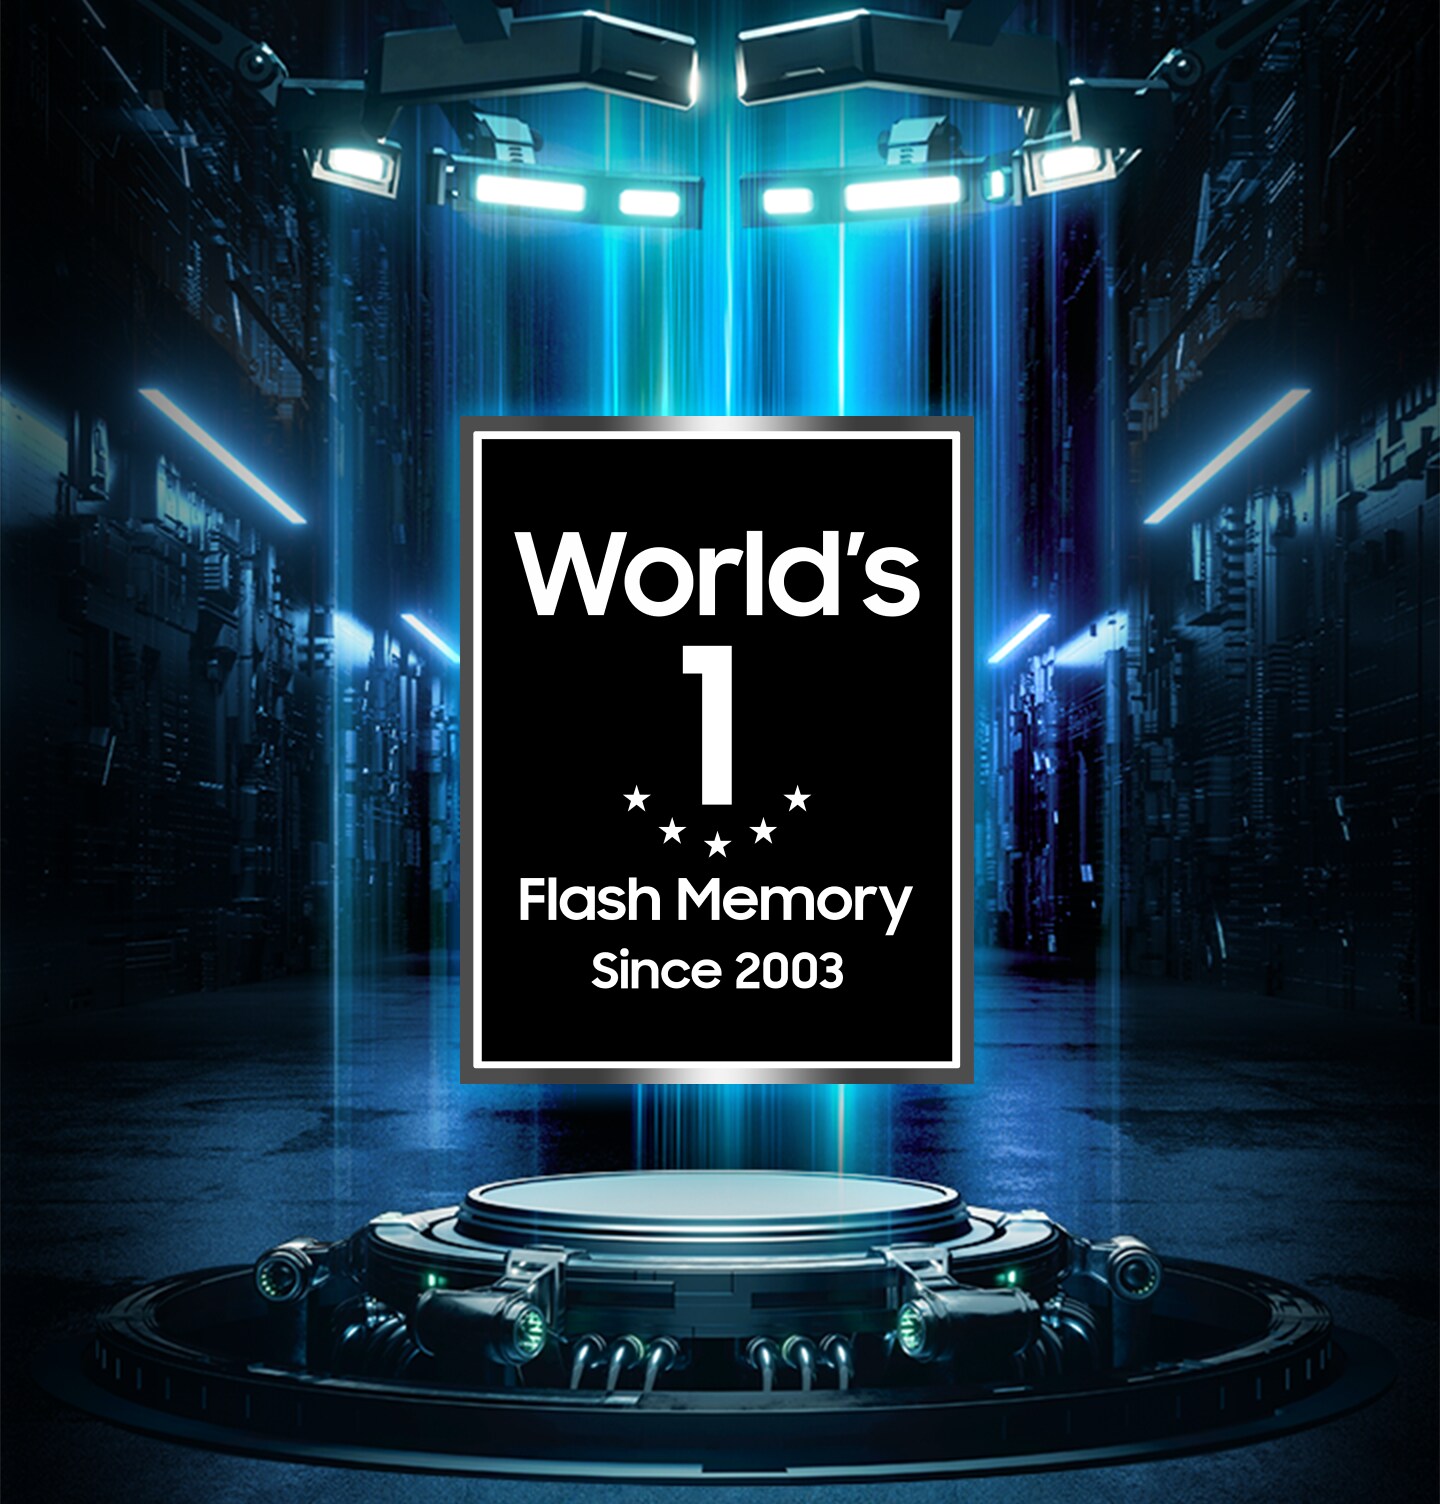 World’s No.1 Flash Memory